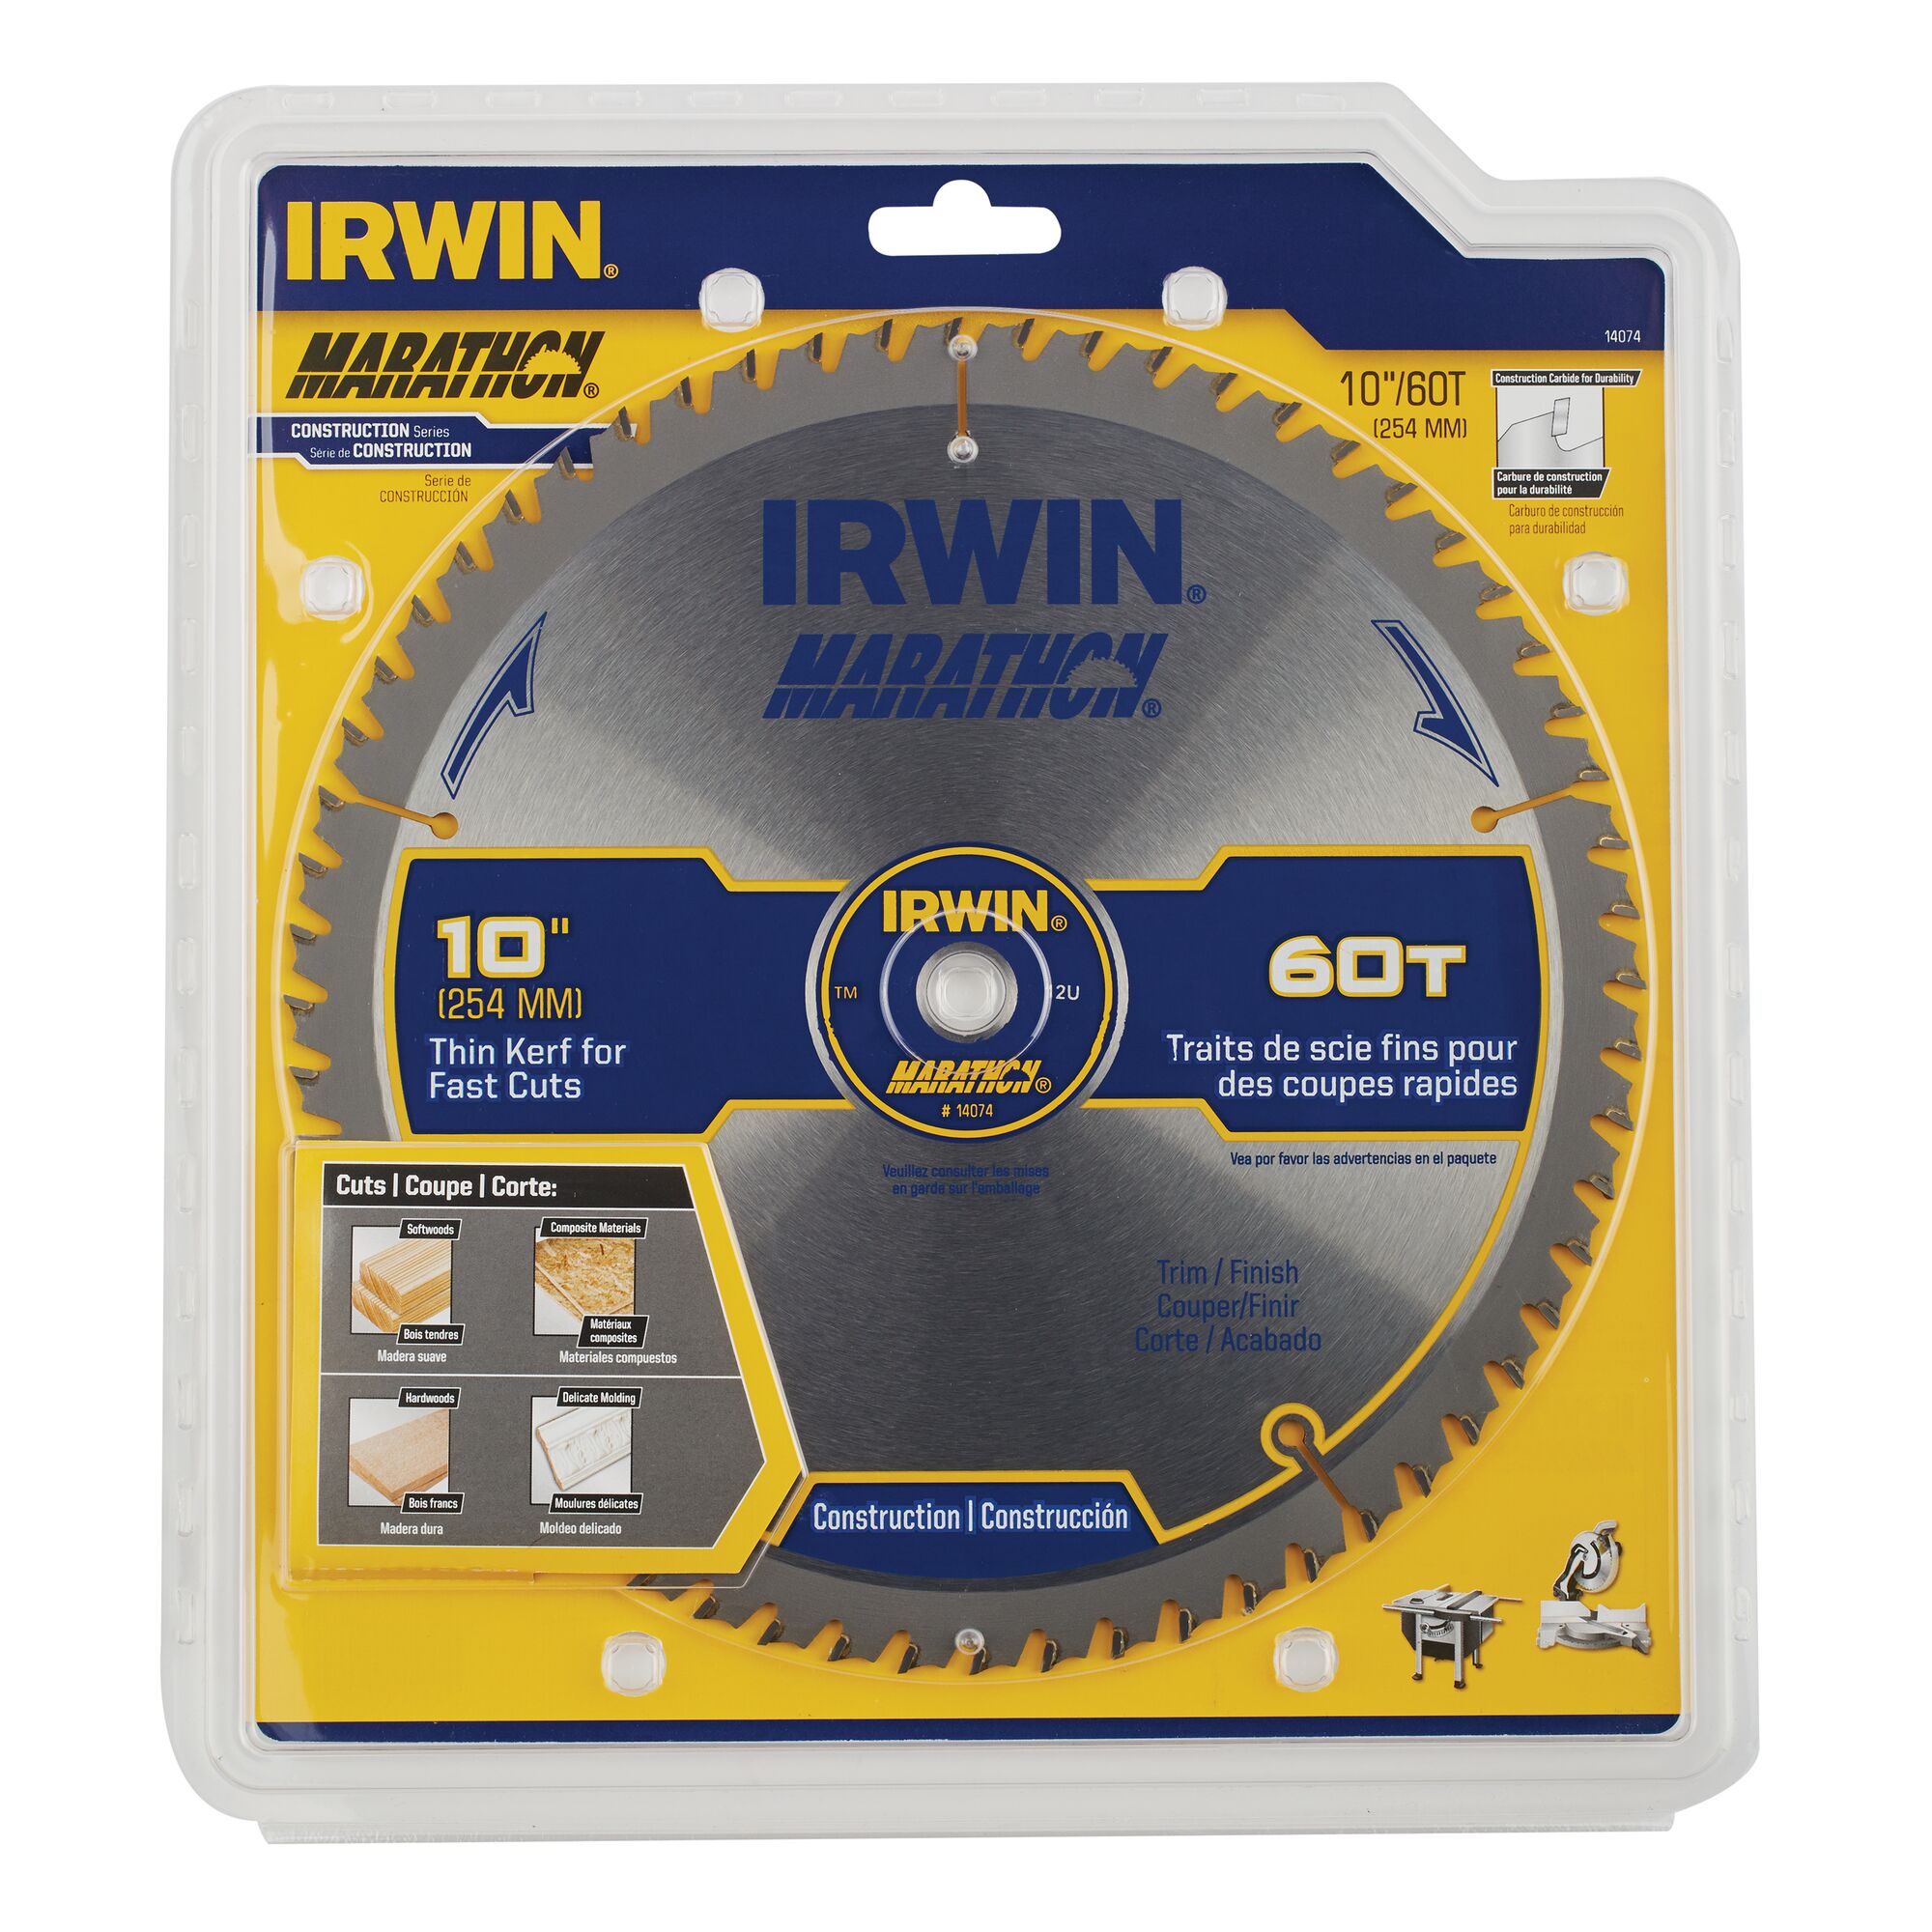 IRWIN 7-1/4-in 120-Tooth High-speed Steel Circular Saw Blade In